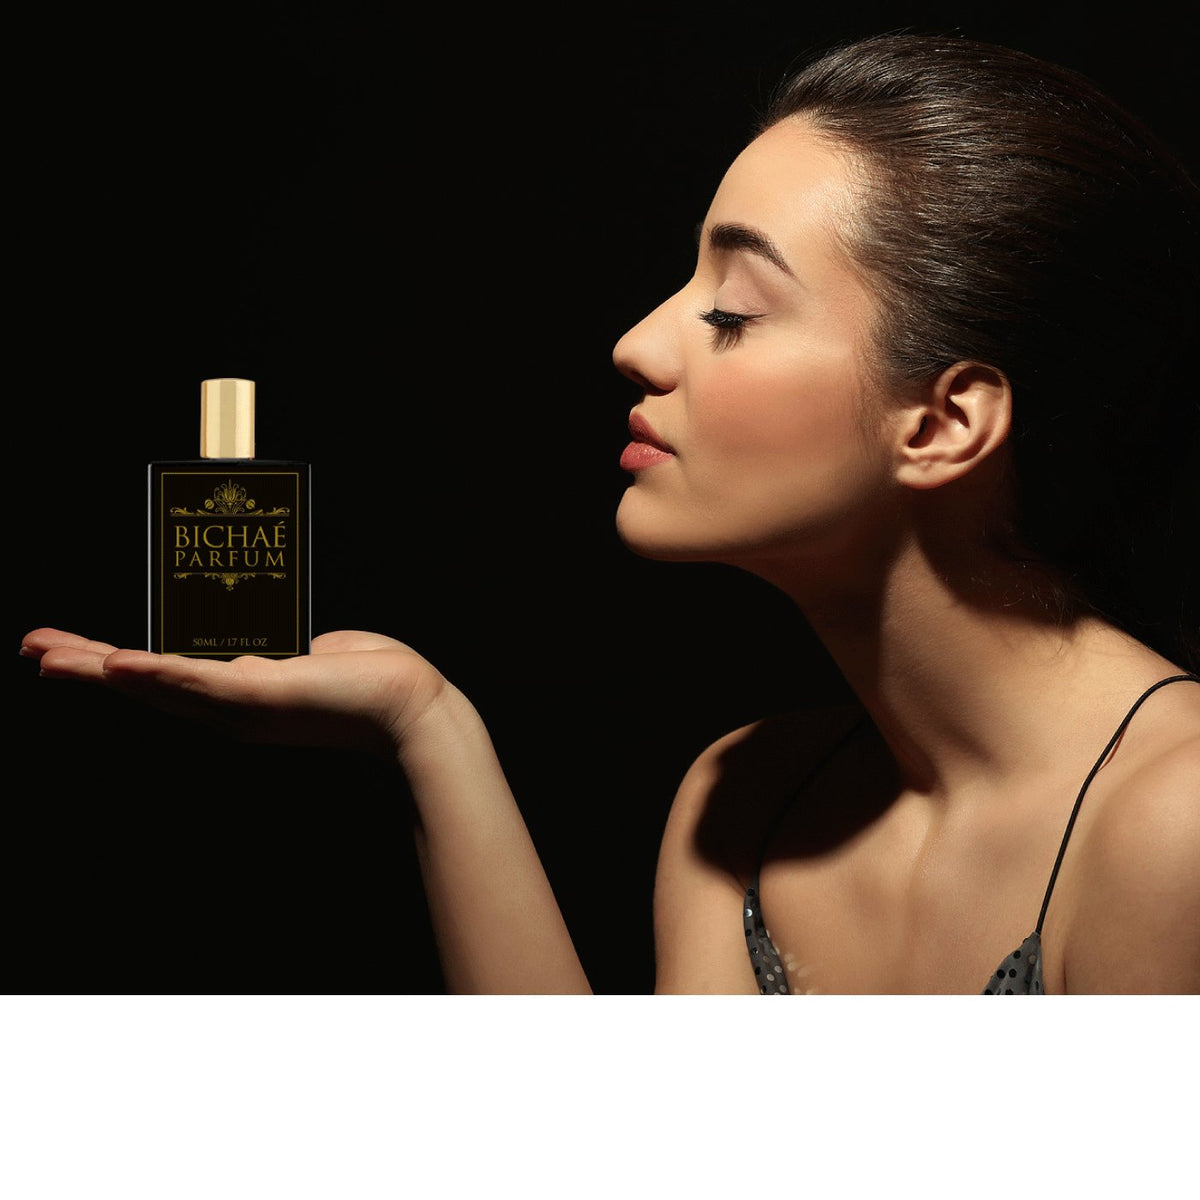 Bichae Parfum No. 115 Inspired by Turbulences – Bichaé Perfumery